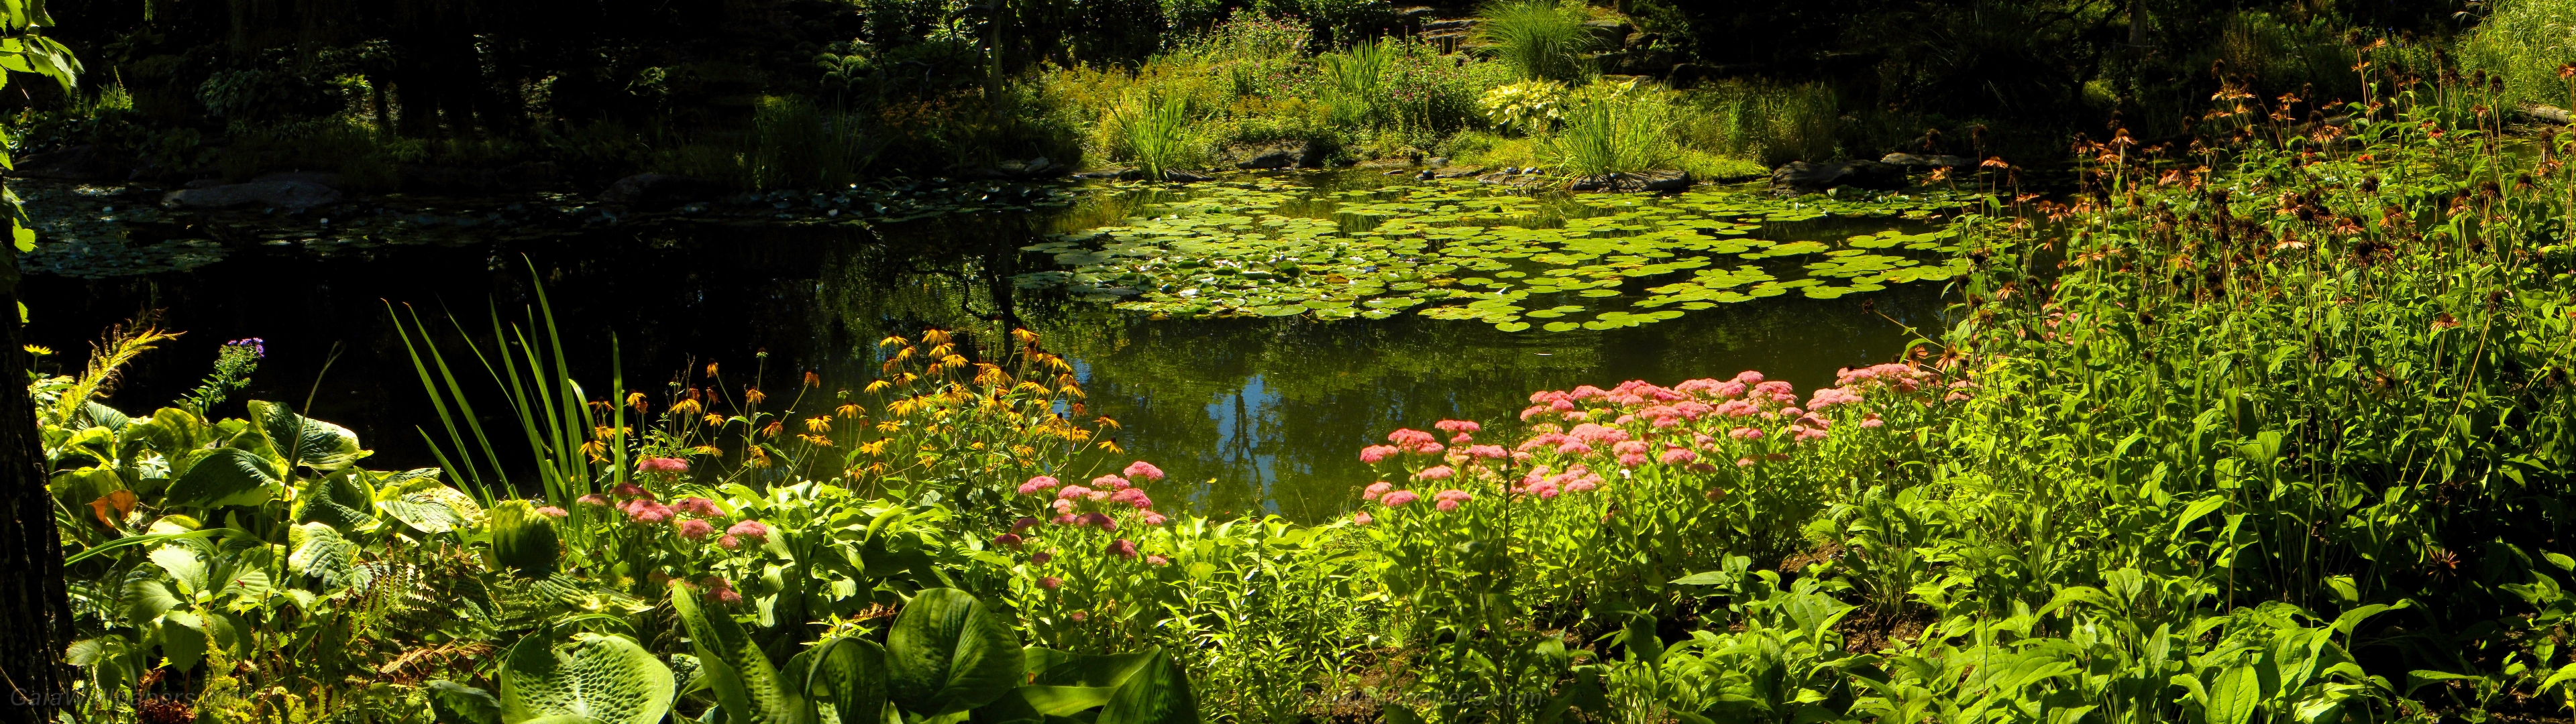 Magnifique étang en fleur - Fonds d'écran gratuits